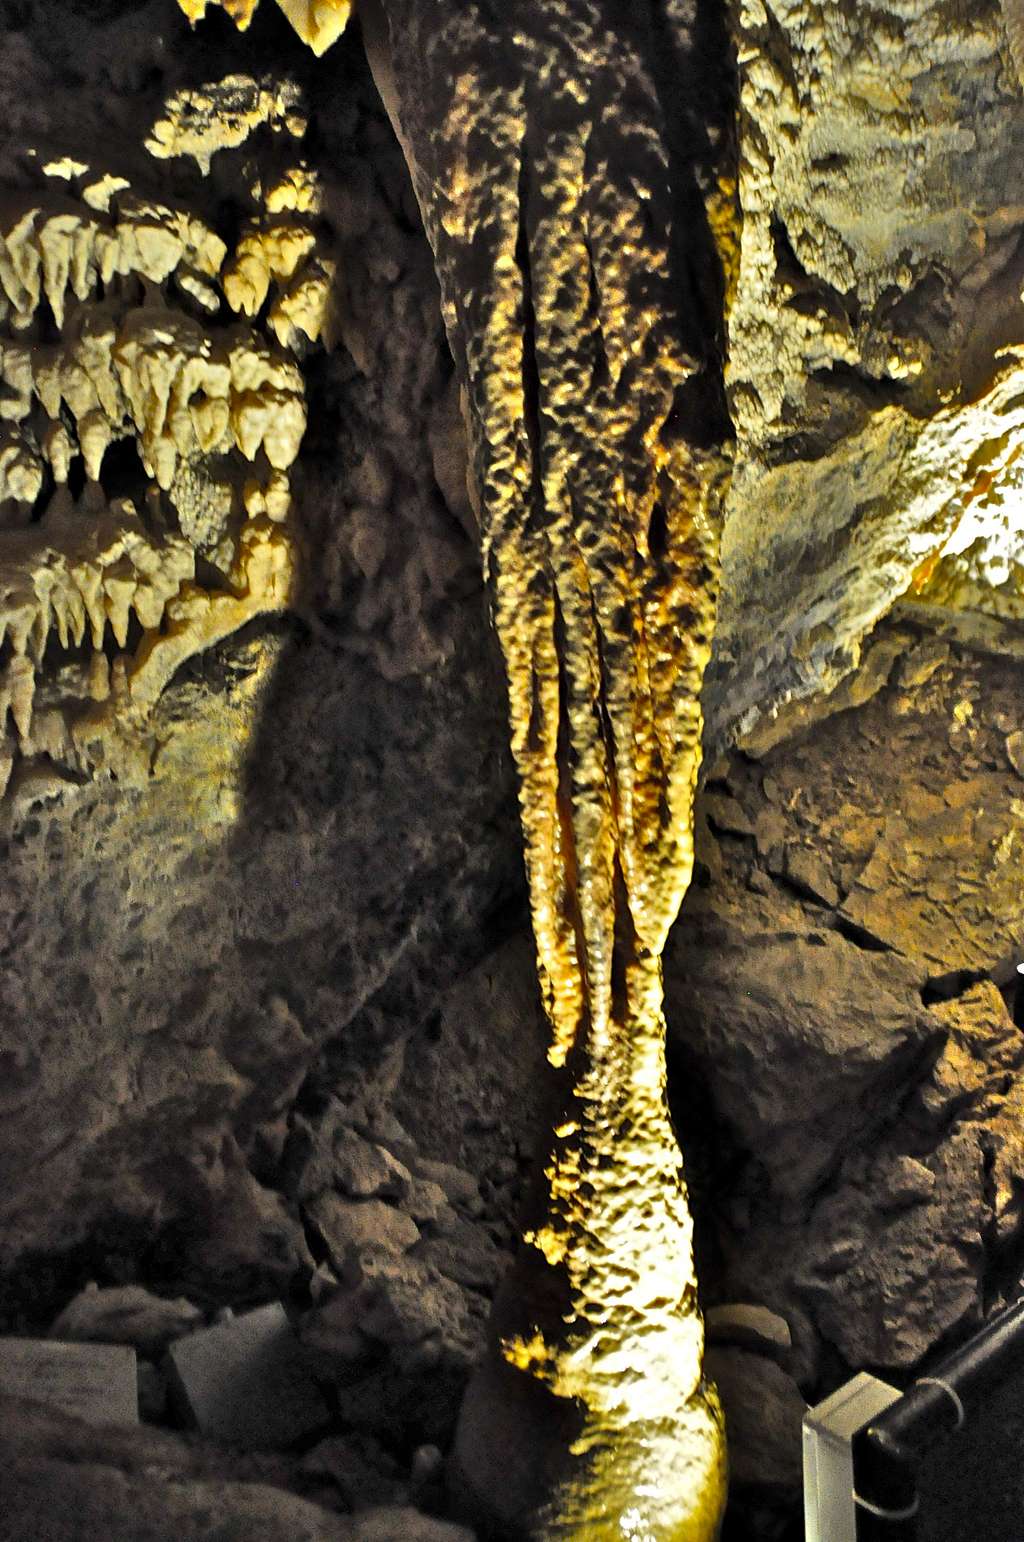 Timpanogos Caves stalactite/stalagmite connected